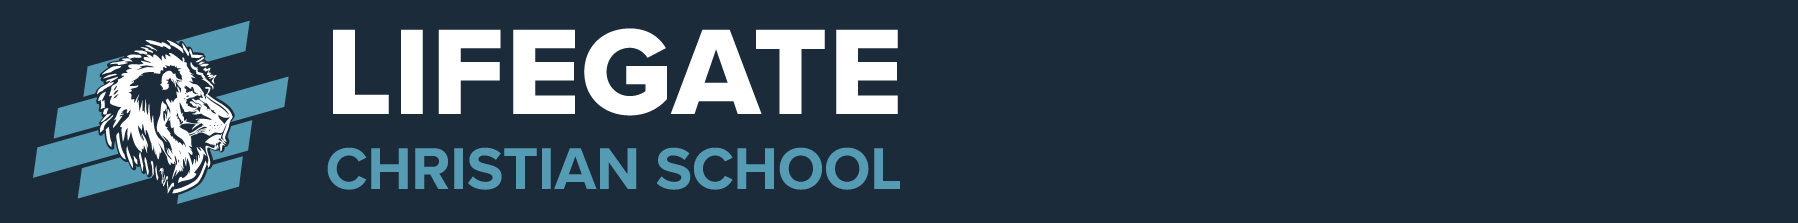 Lifegate Christian School (LCS)